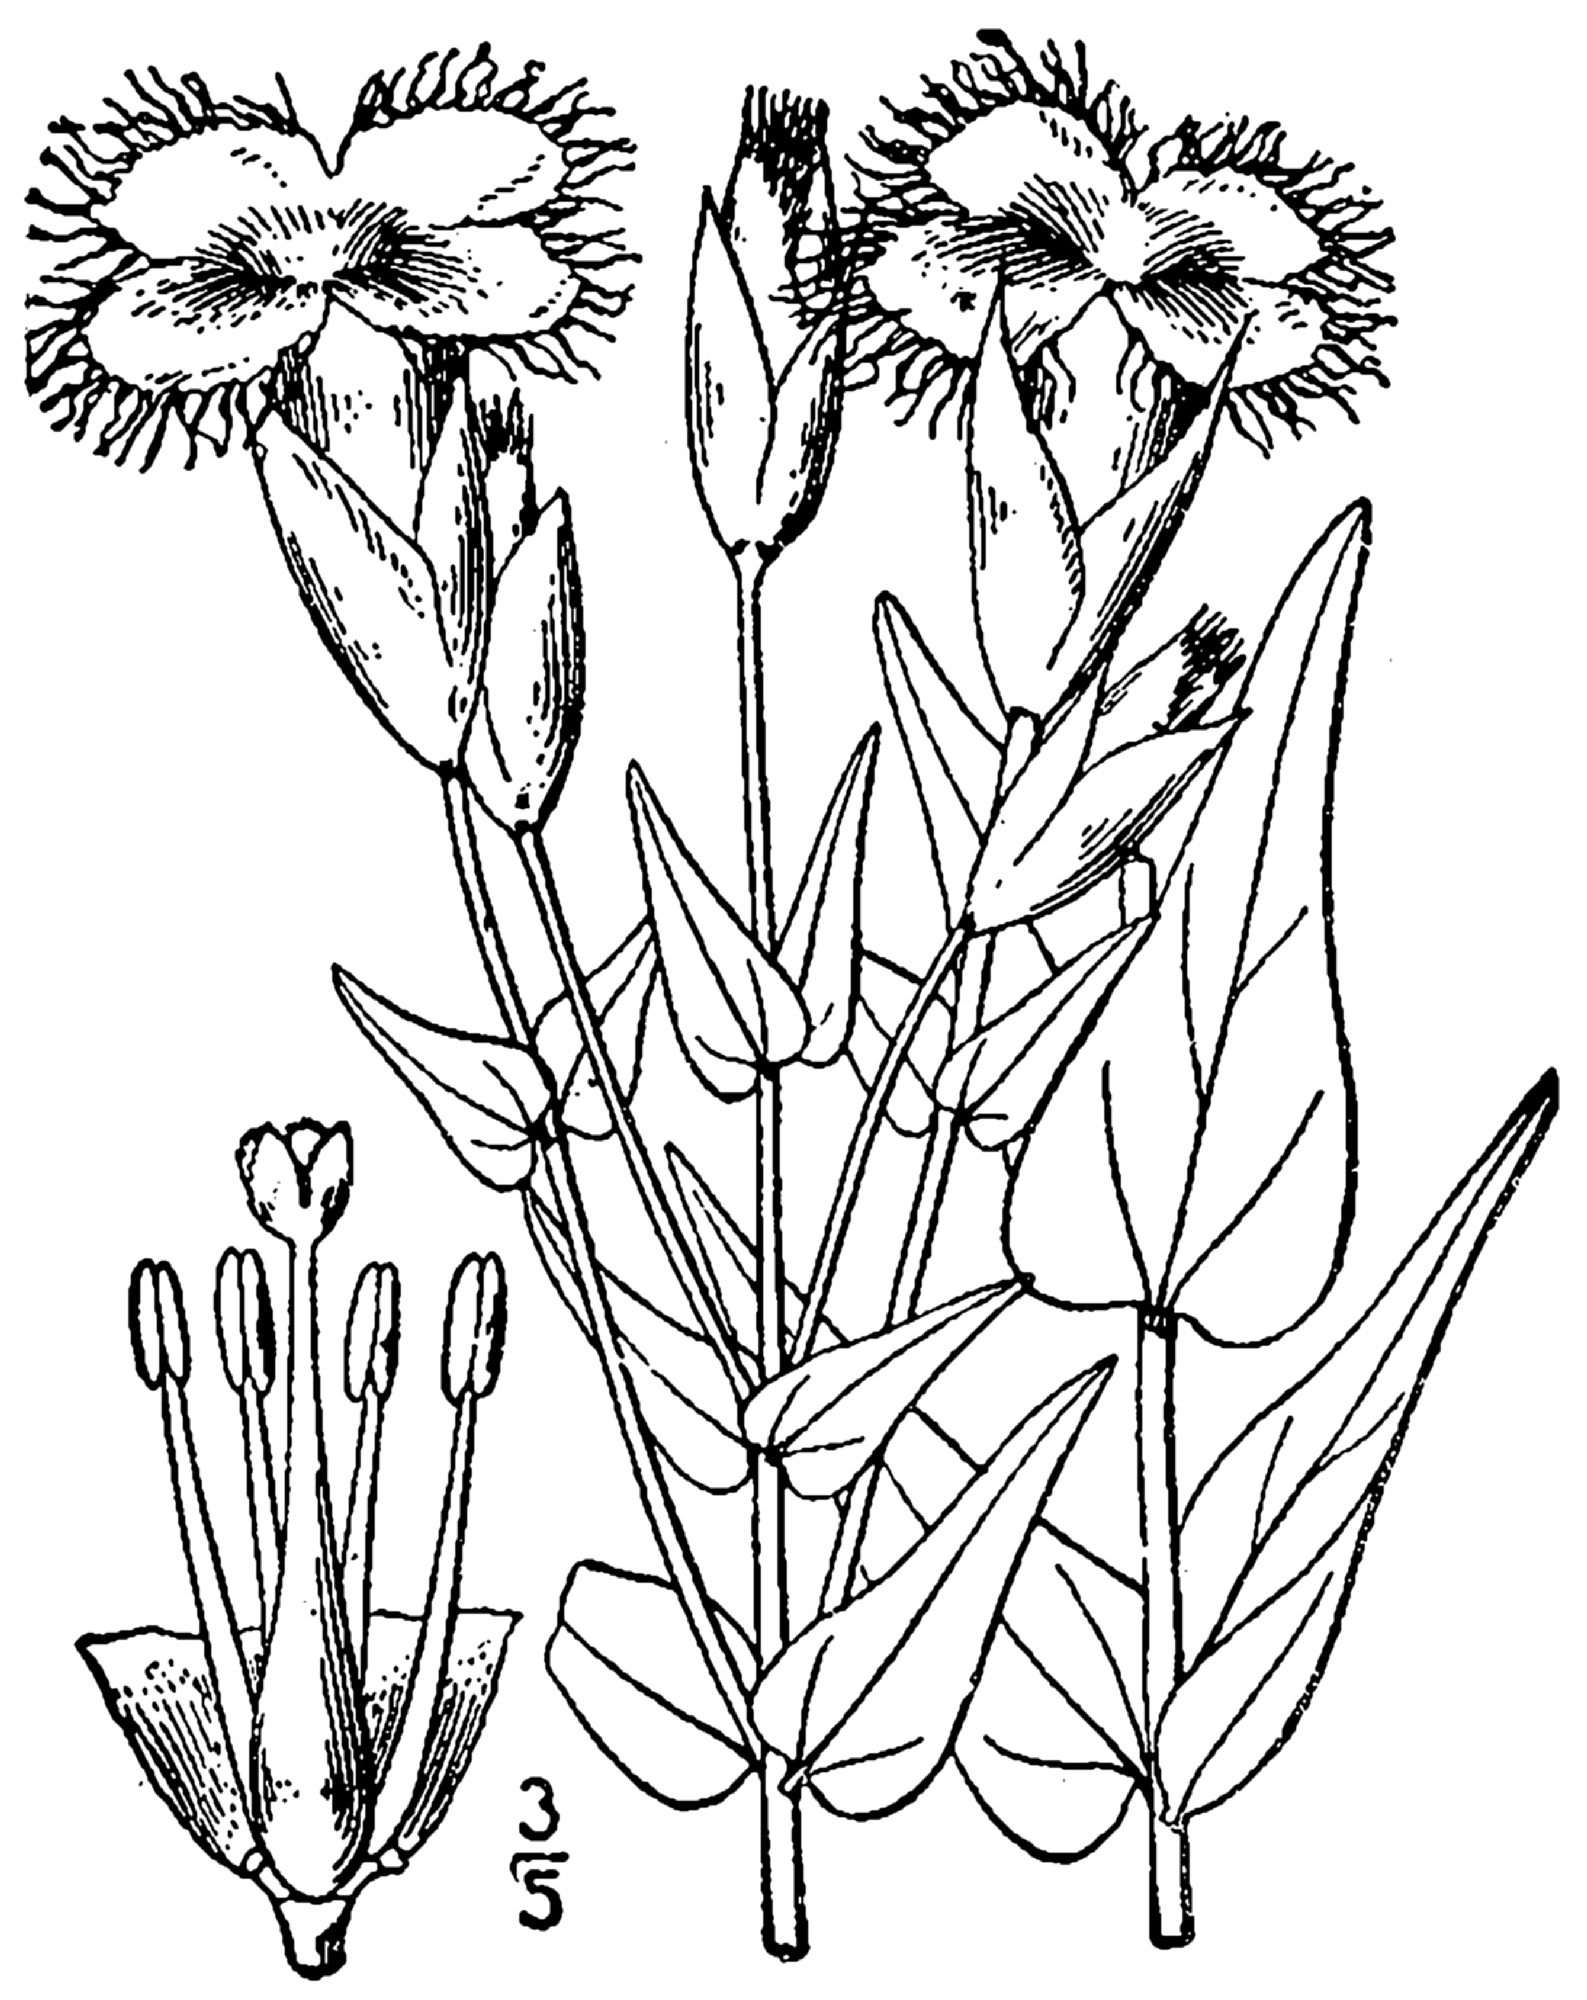 1913 Fringed Gentian botanical drawing.